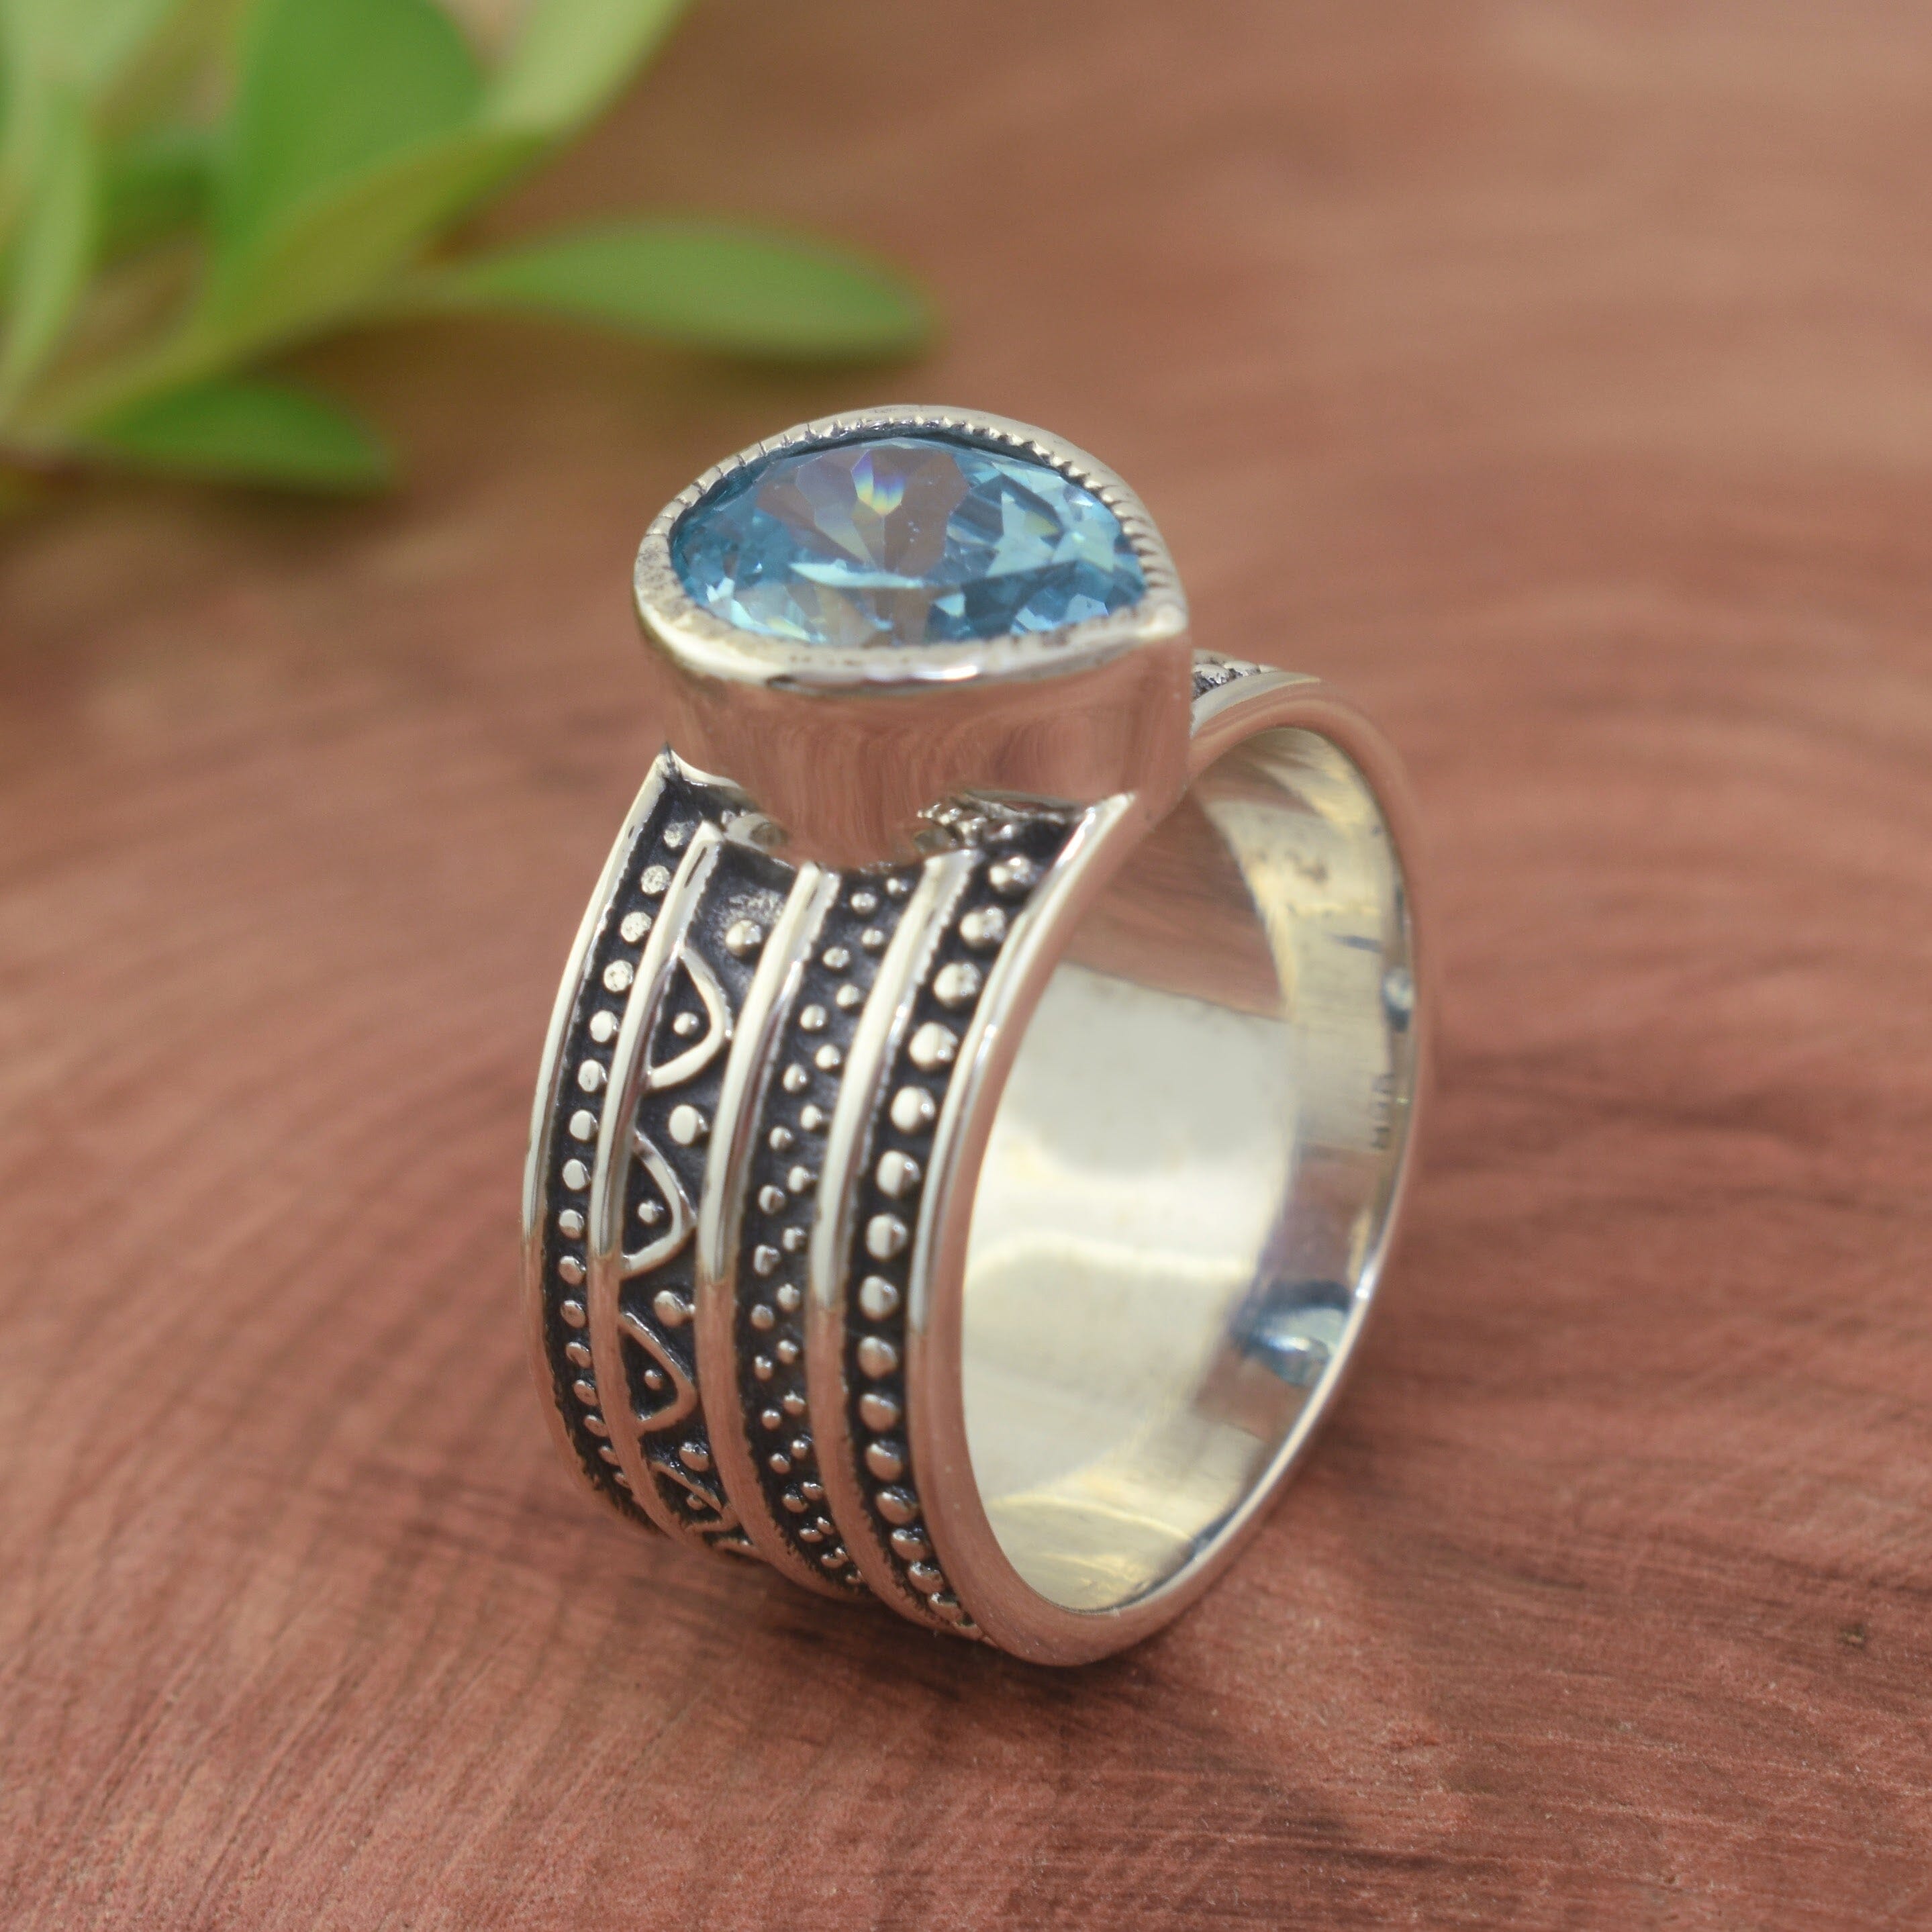 Blue teardrop shaped stone set in .925 sterling silver band